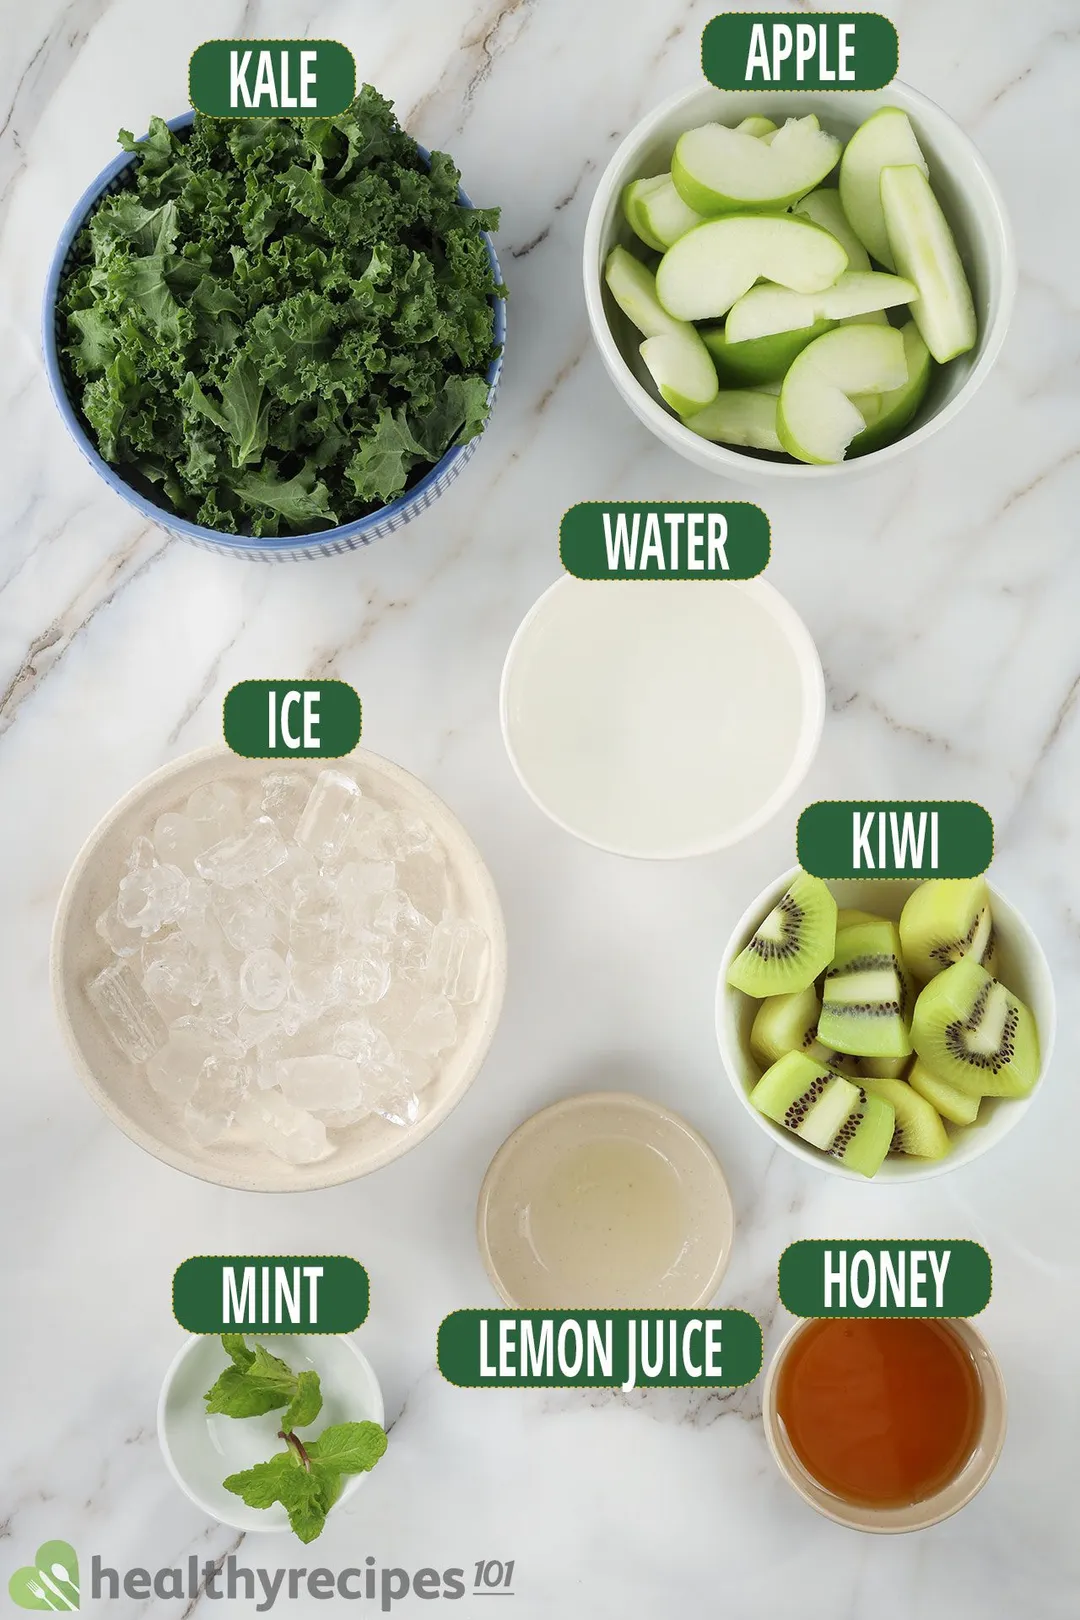 Ingredients for apple kiwi kale smoothie, including fresh kale, sliced green apples, sliced green kiwis, and other smoothie essentials.